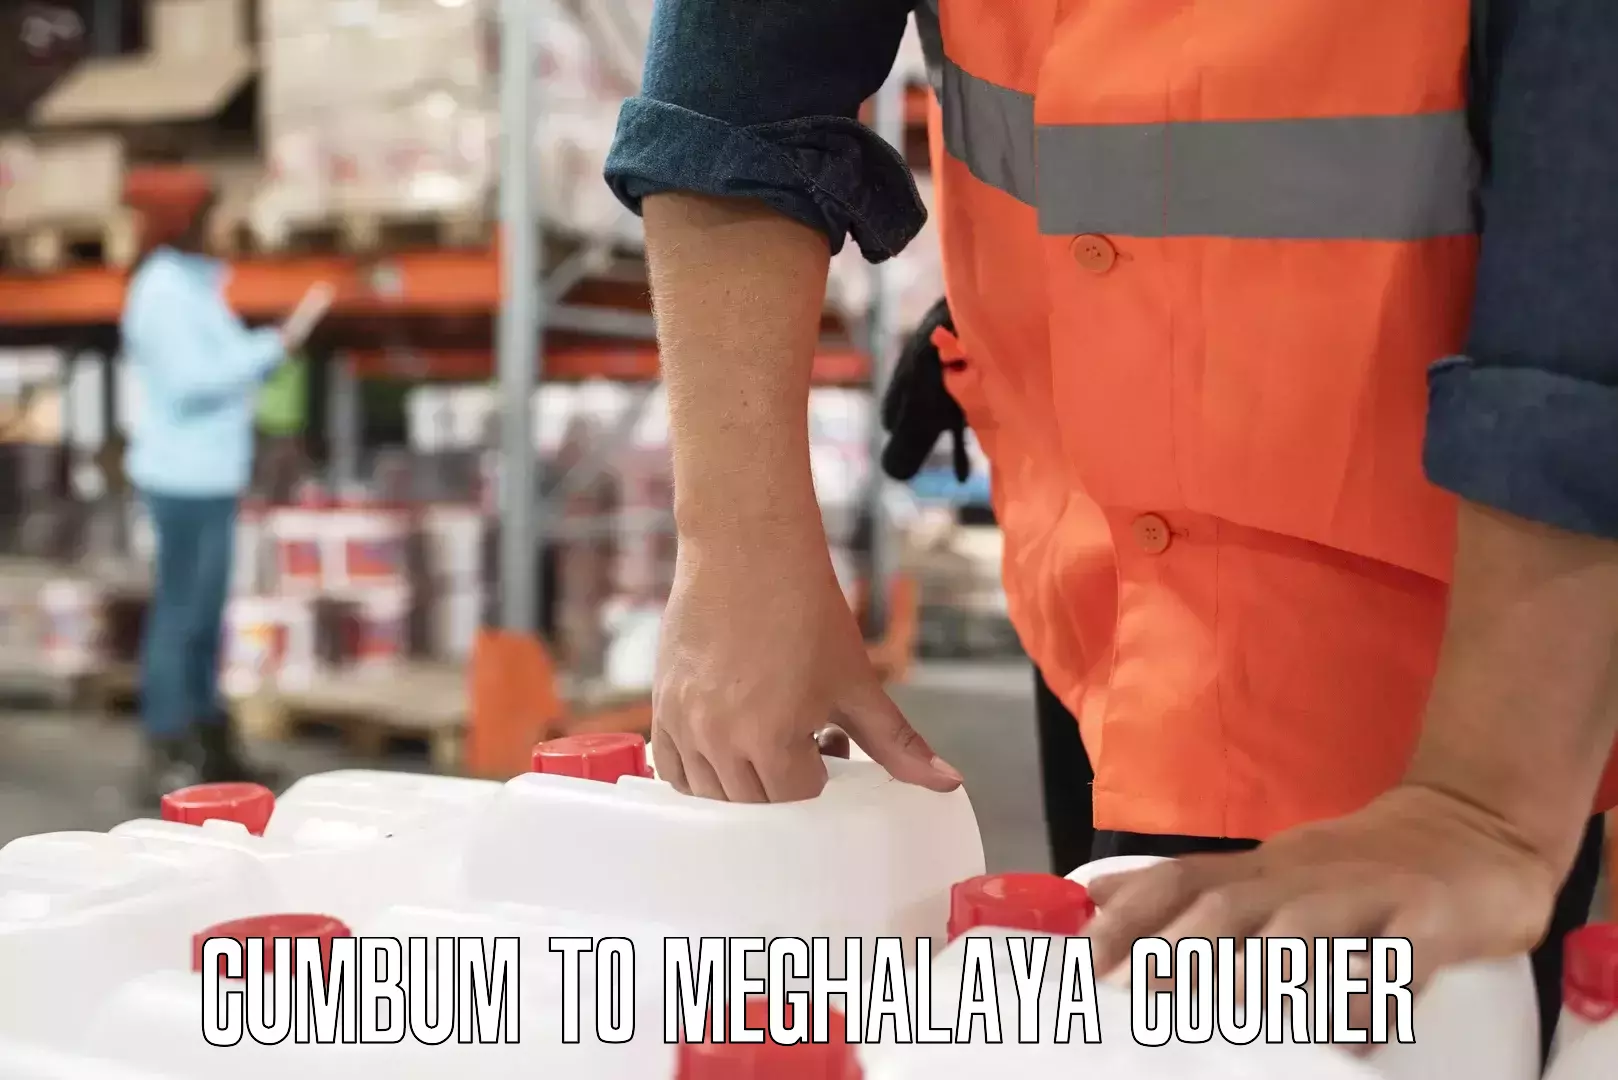 Customizable shipping options Cumbum to Meghalaya